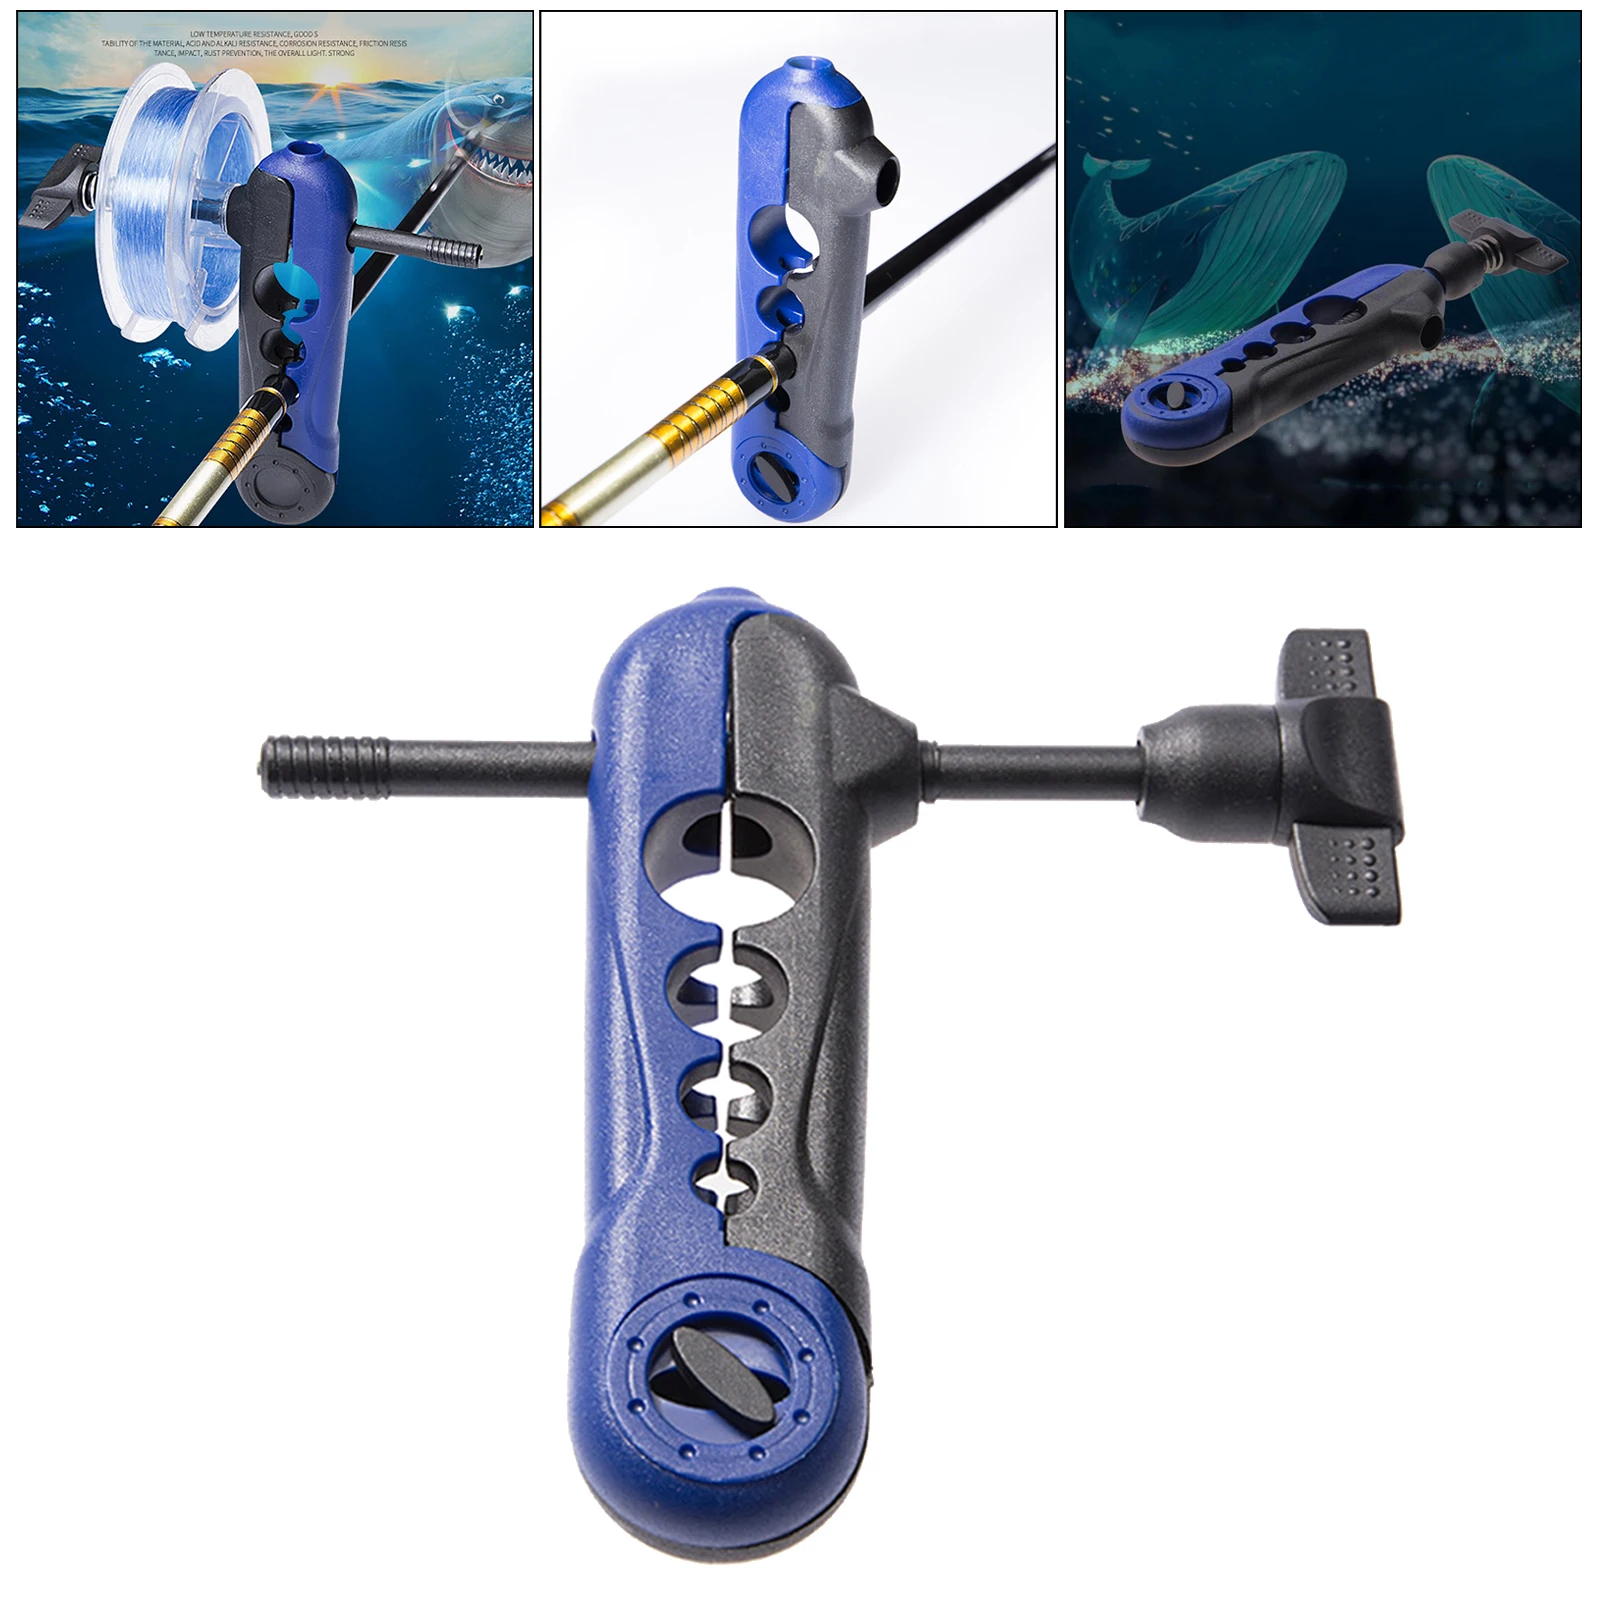 Portable Universal Multifunctional Adjustable Outdoor Mini Fishing Reel Spooler Line Winder Tool Fishing Winder Board Accessory